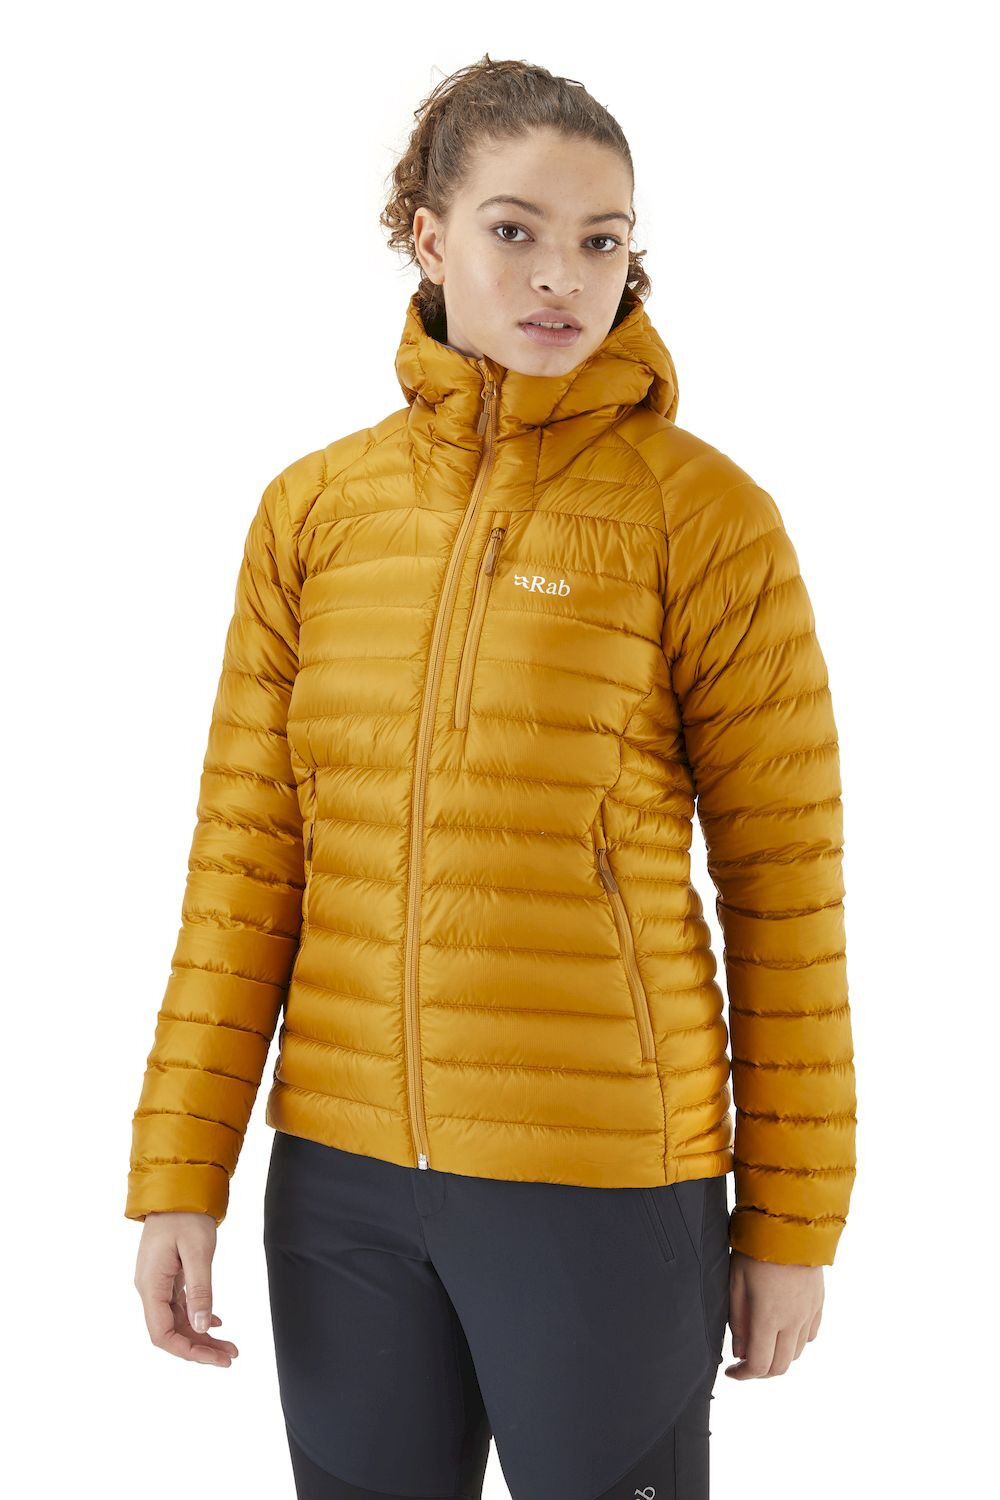 Rab Microlight Alpine Jacket - Untuvatakki - Naiset